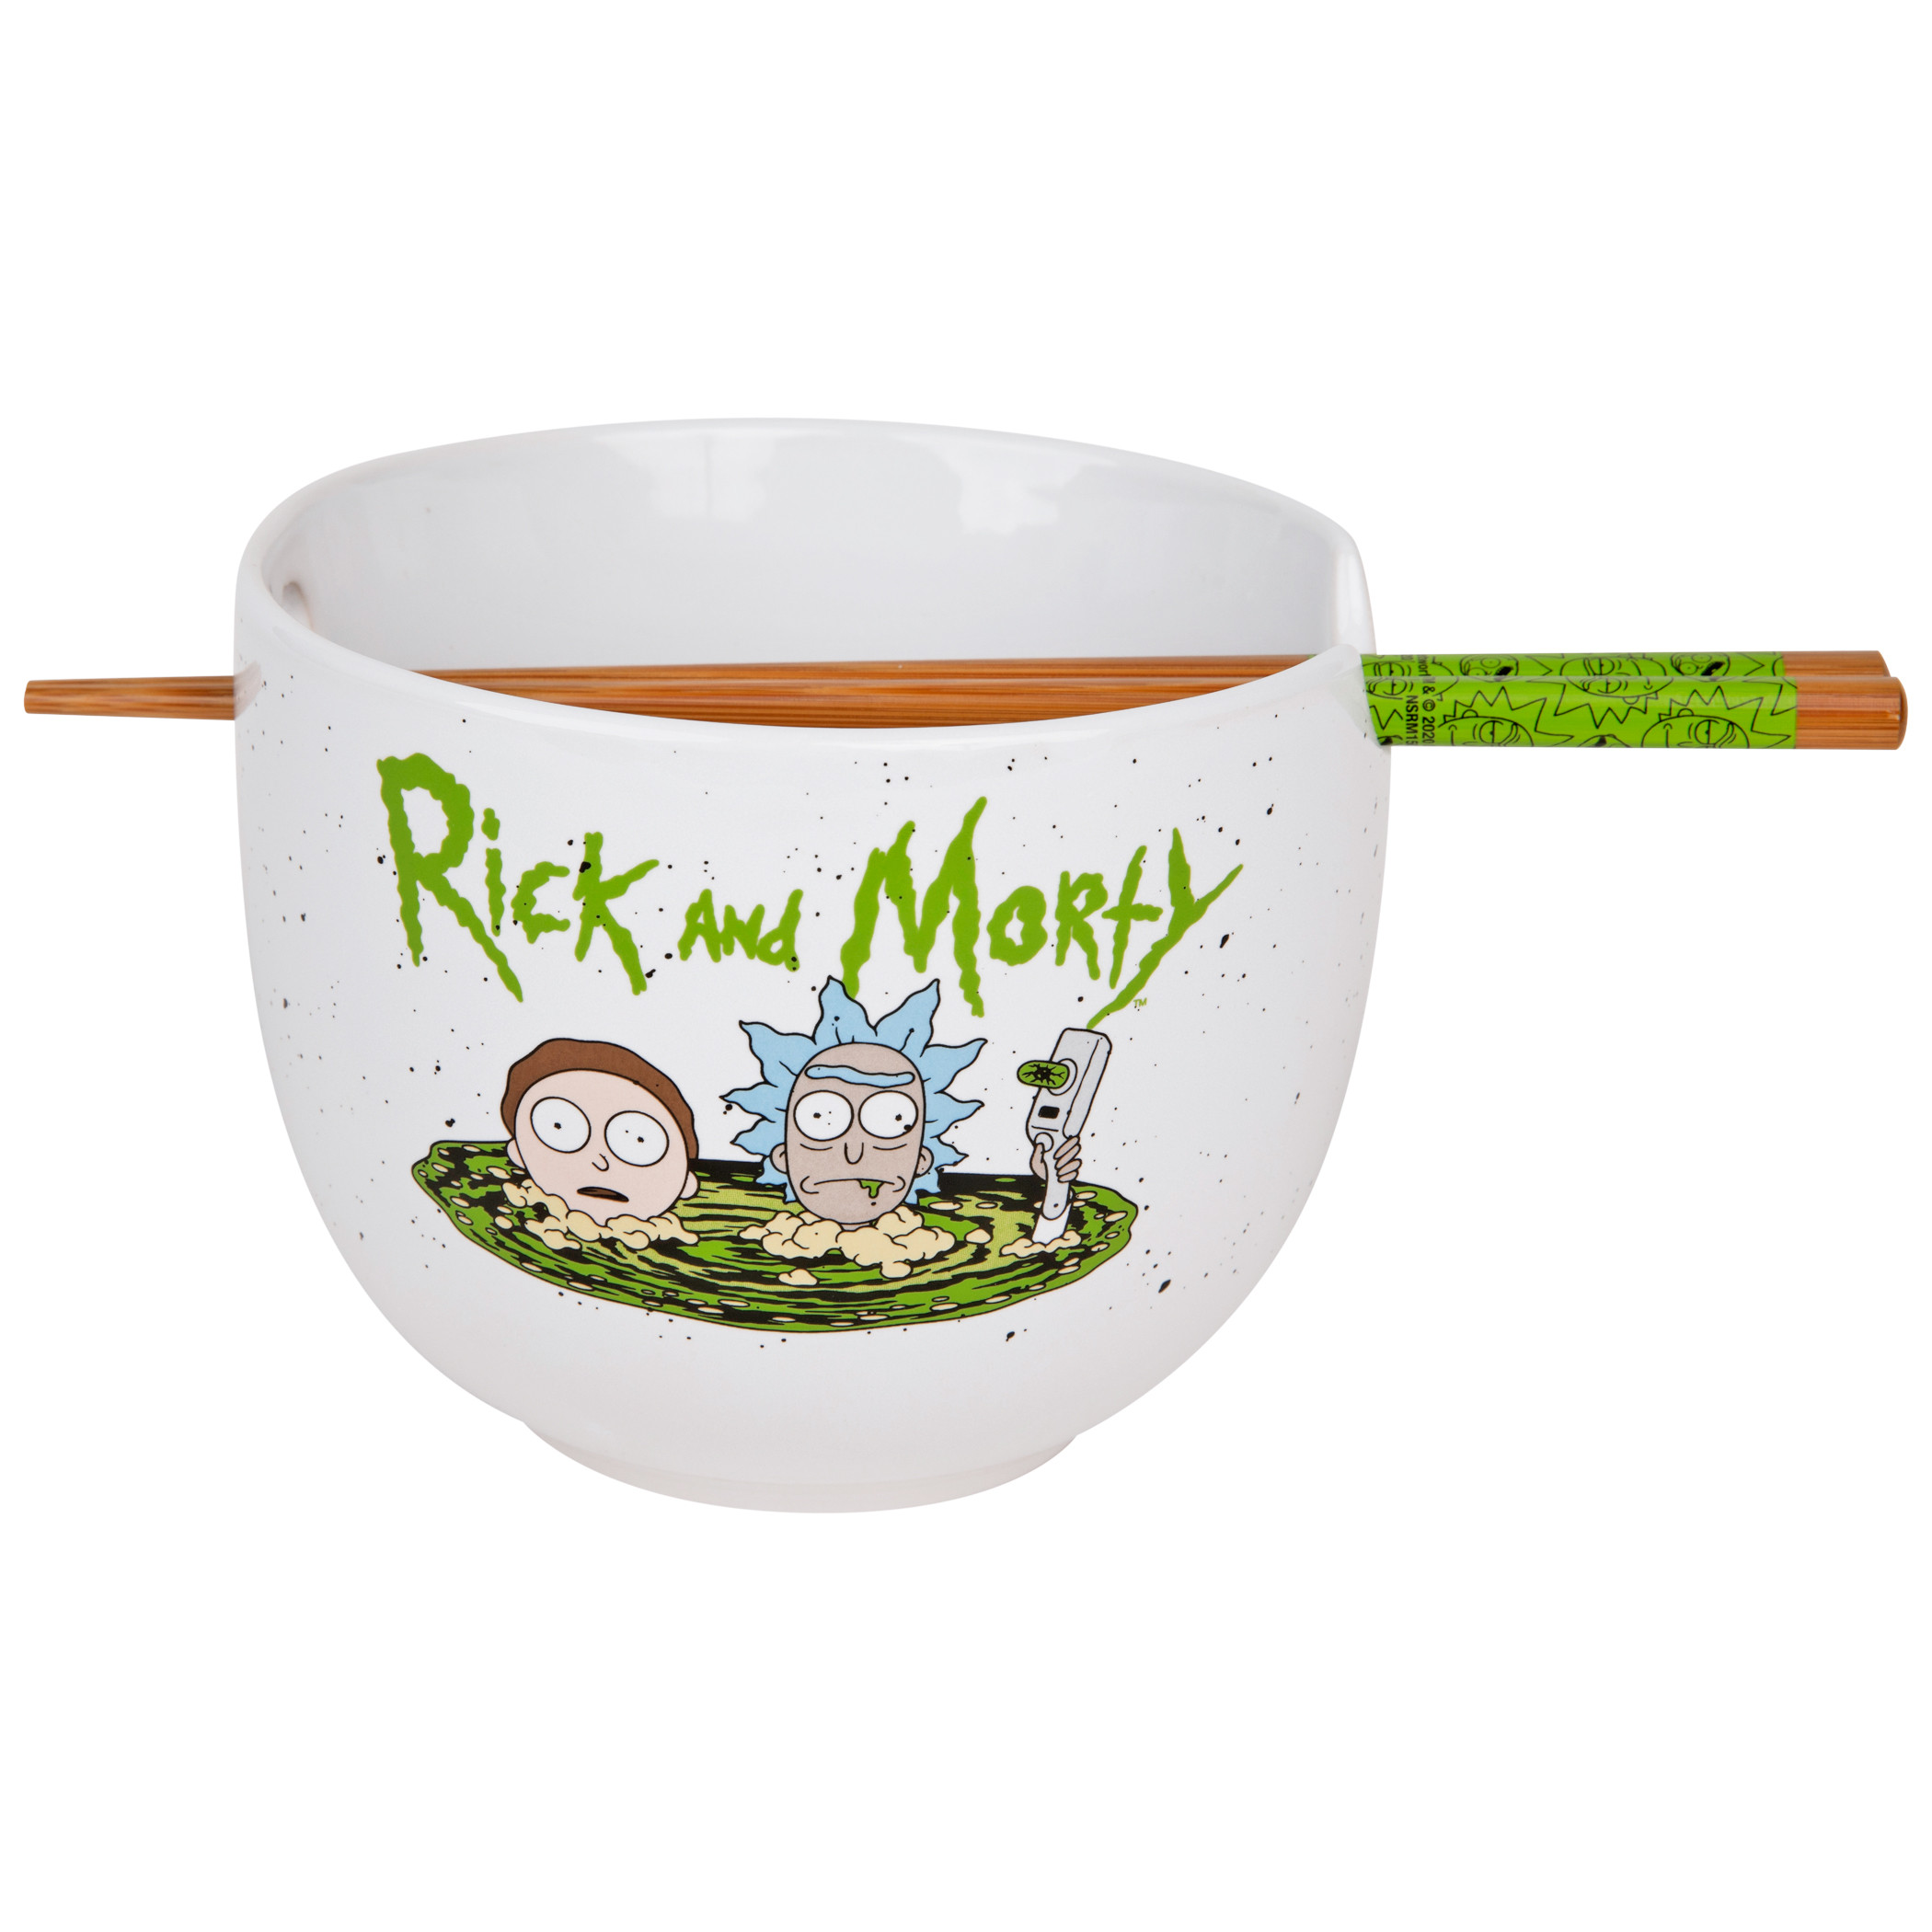 Rick and Morty Portal Sinking Ramen Bowl with Chopsticks